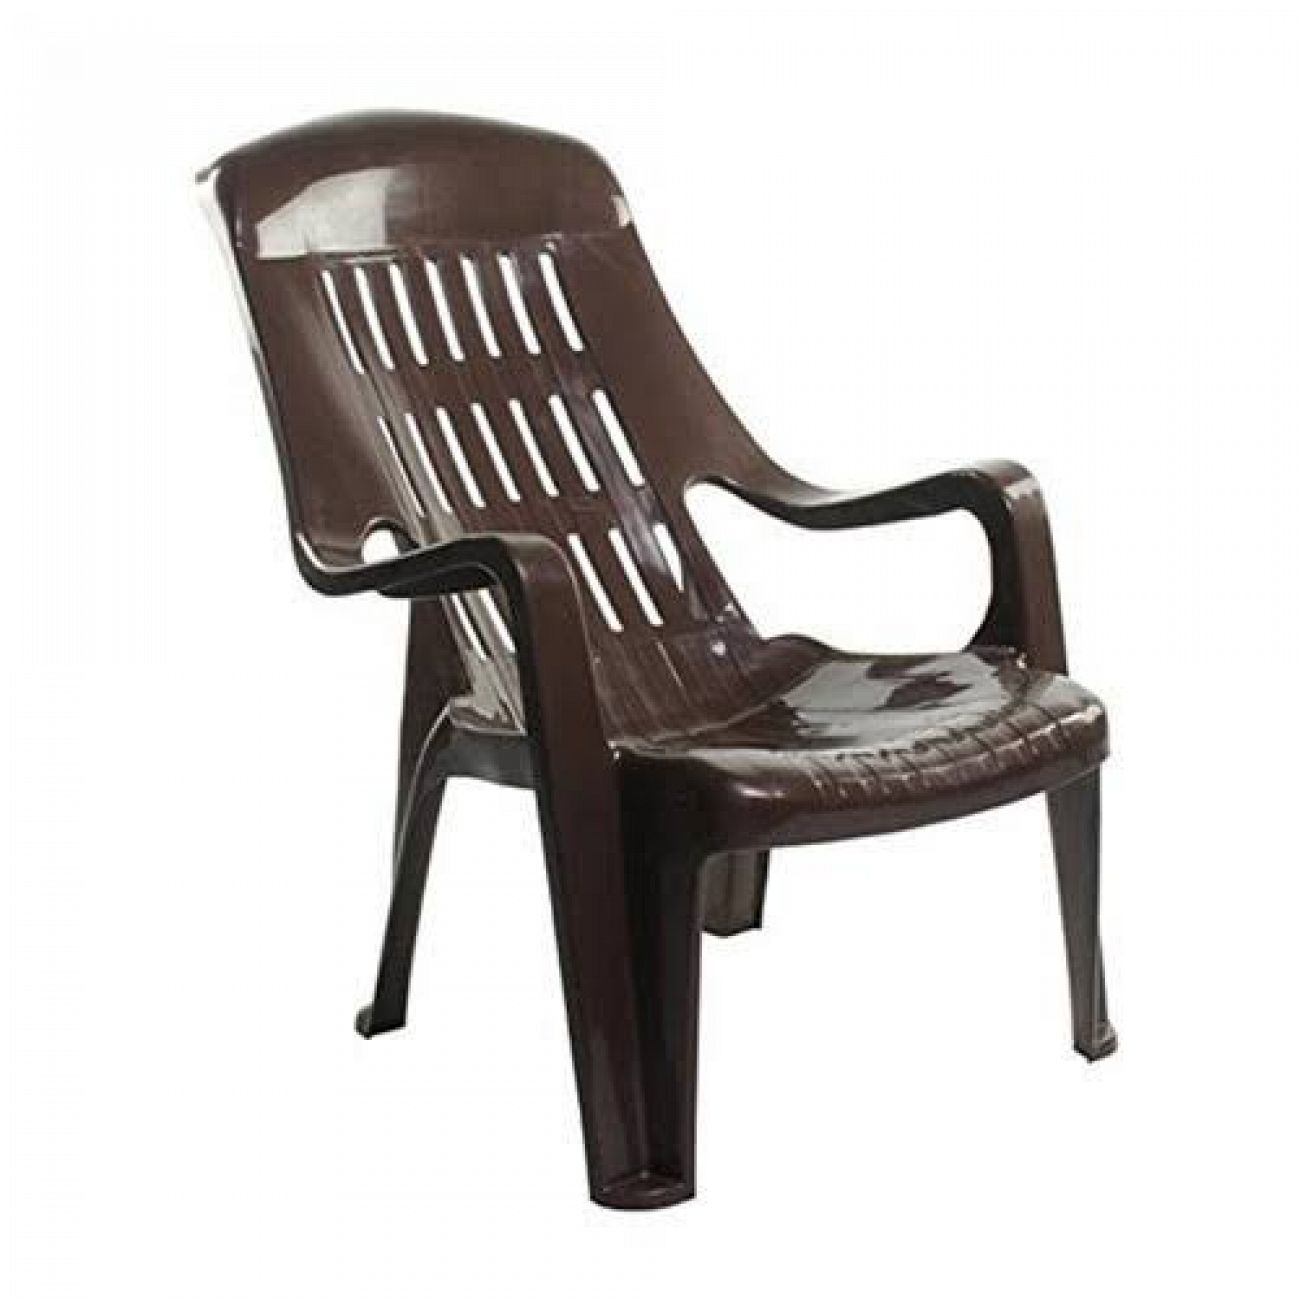 Cello comfort chair